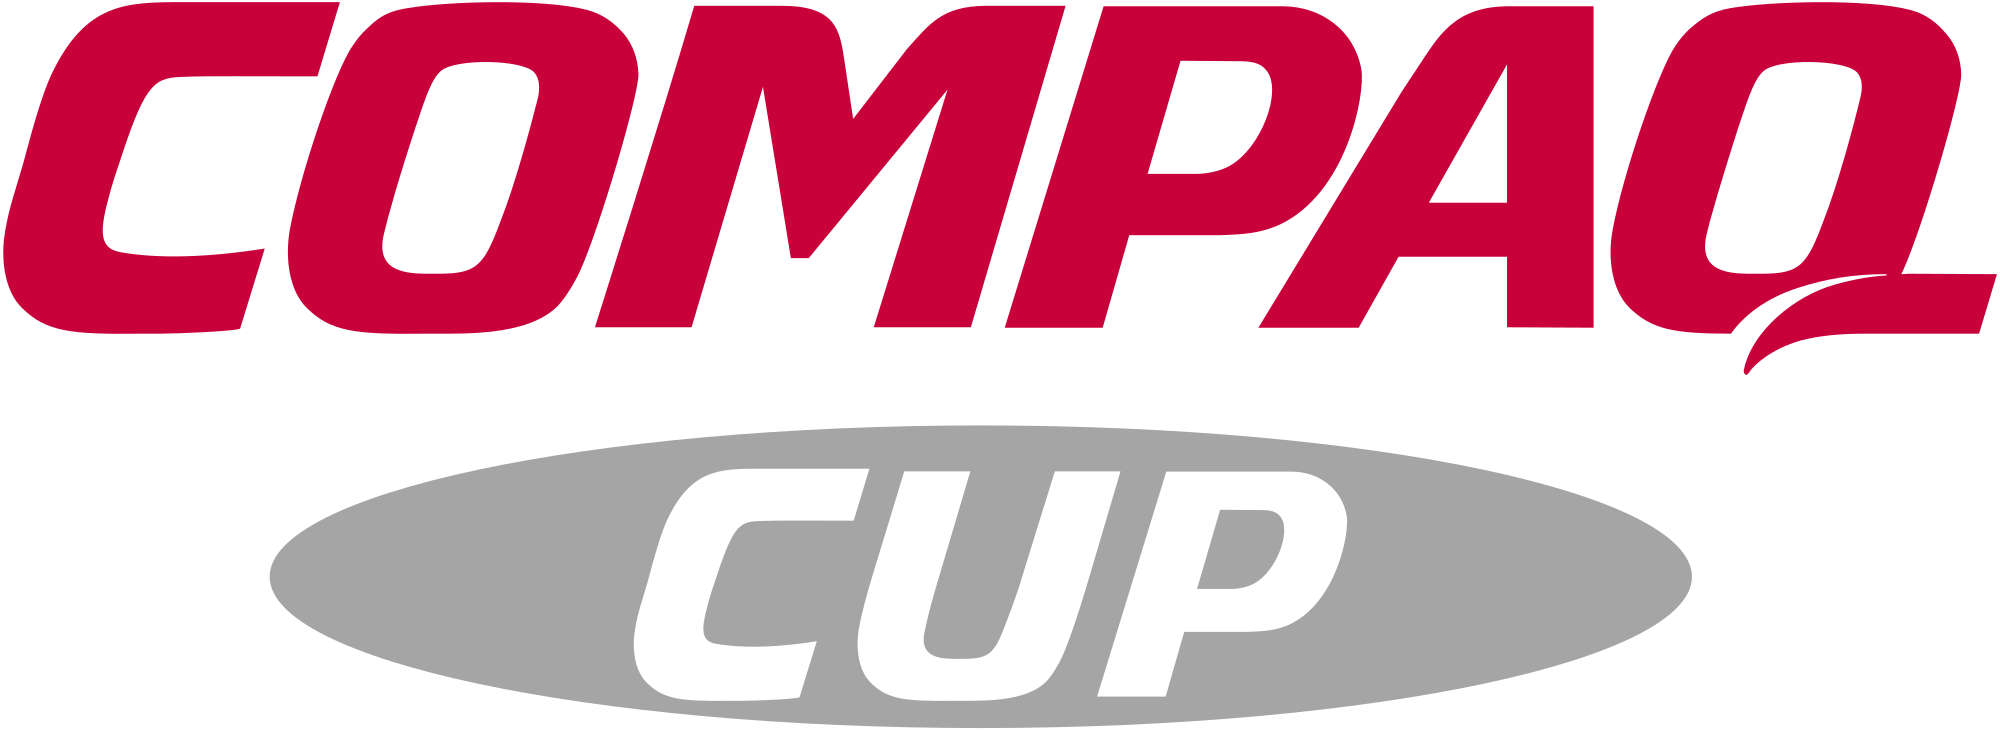 Compaq Logo - File:Compaq Cup logo 1999.svg - Wikimedia Commons